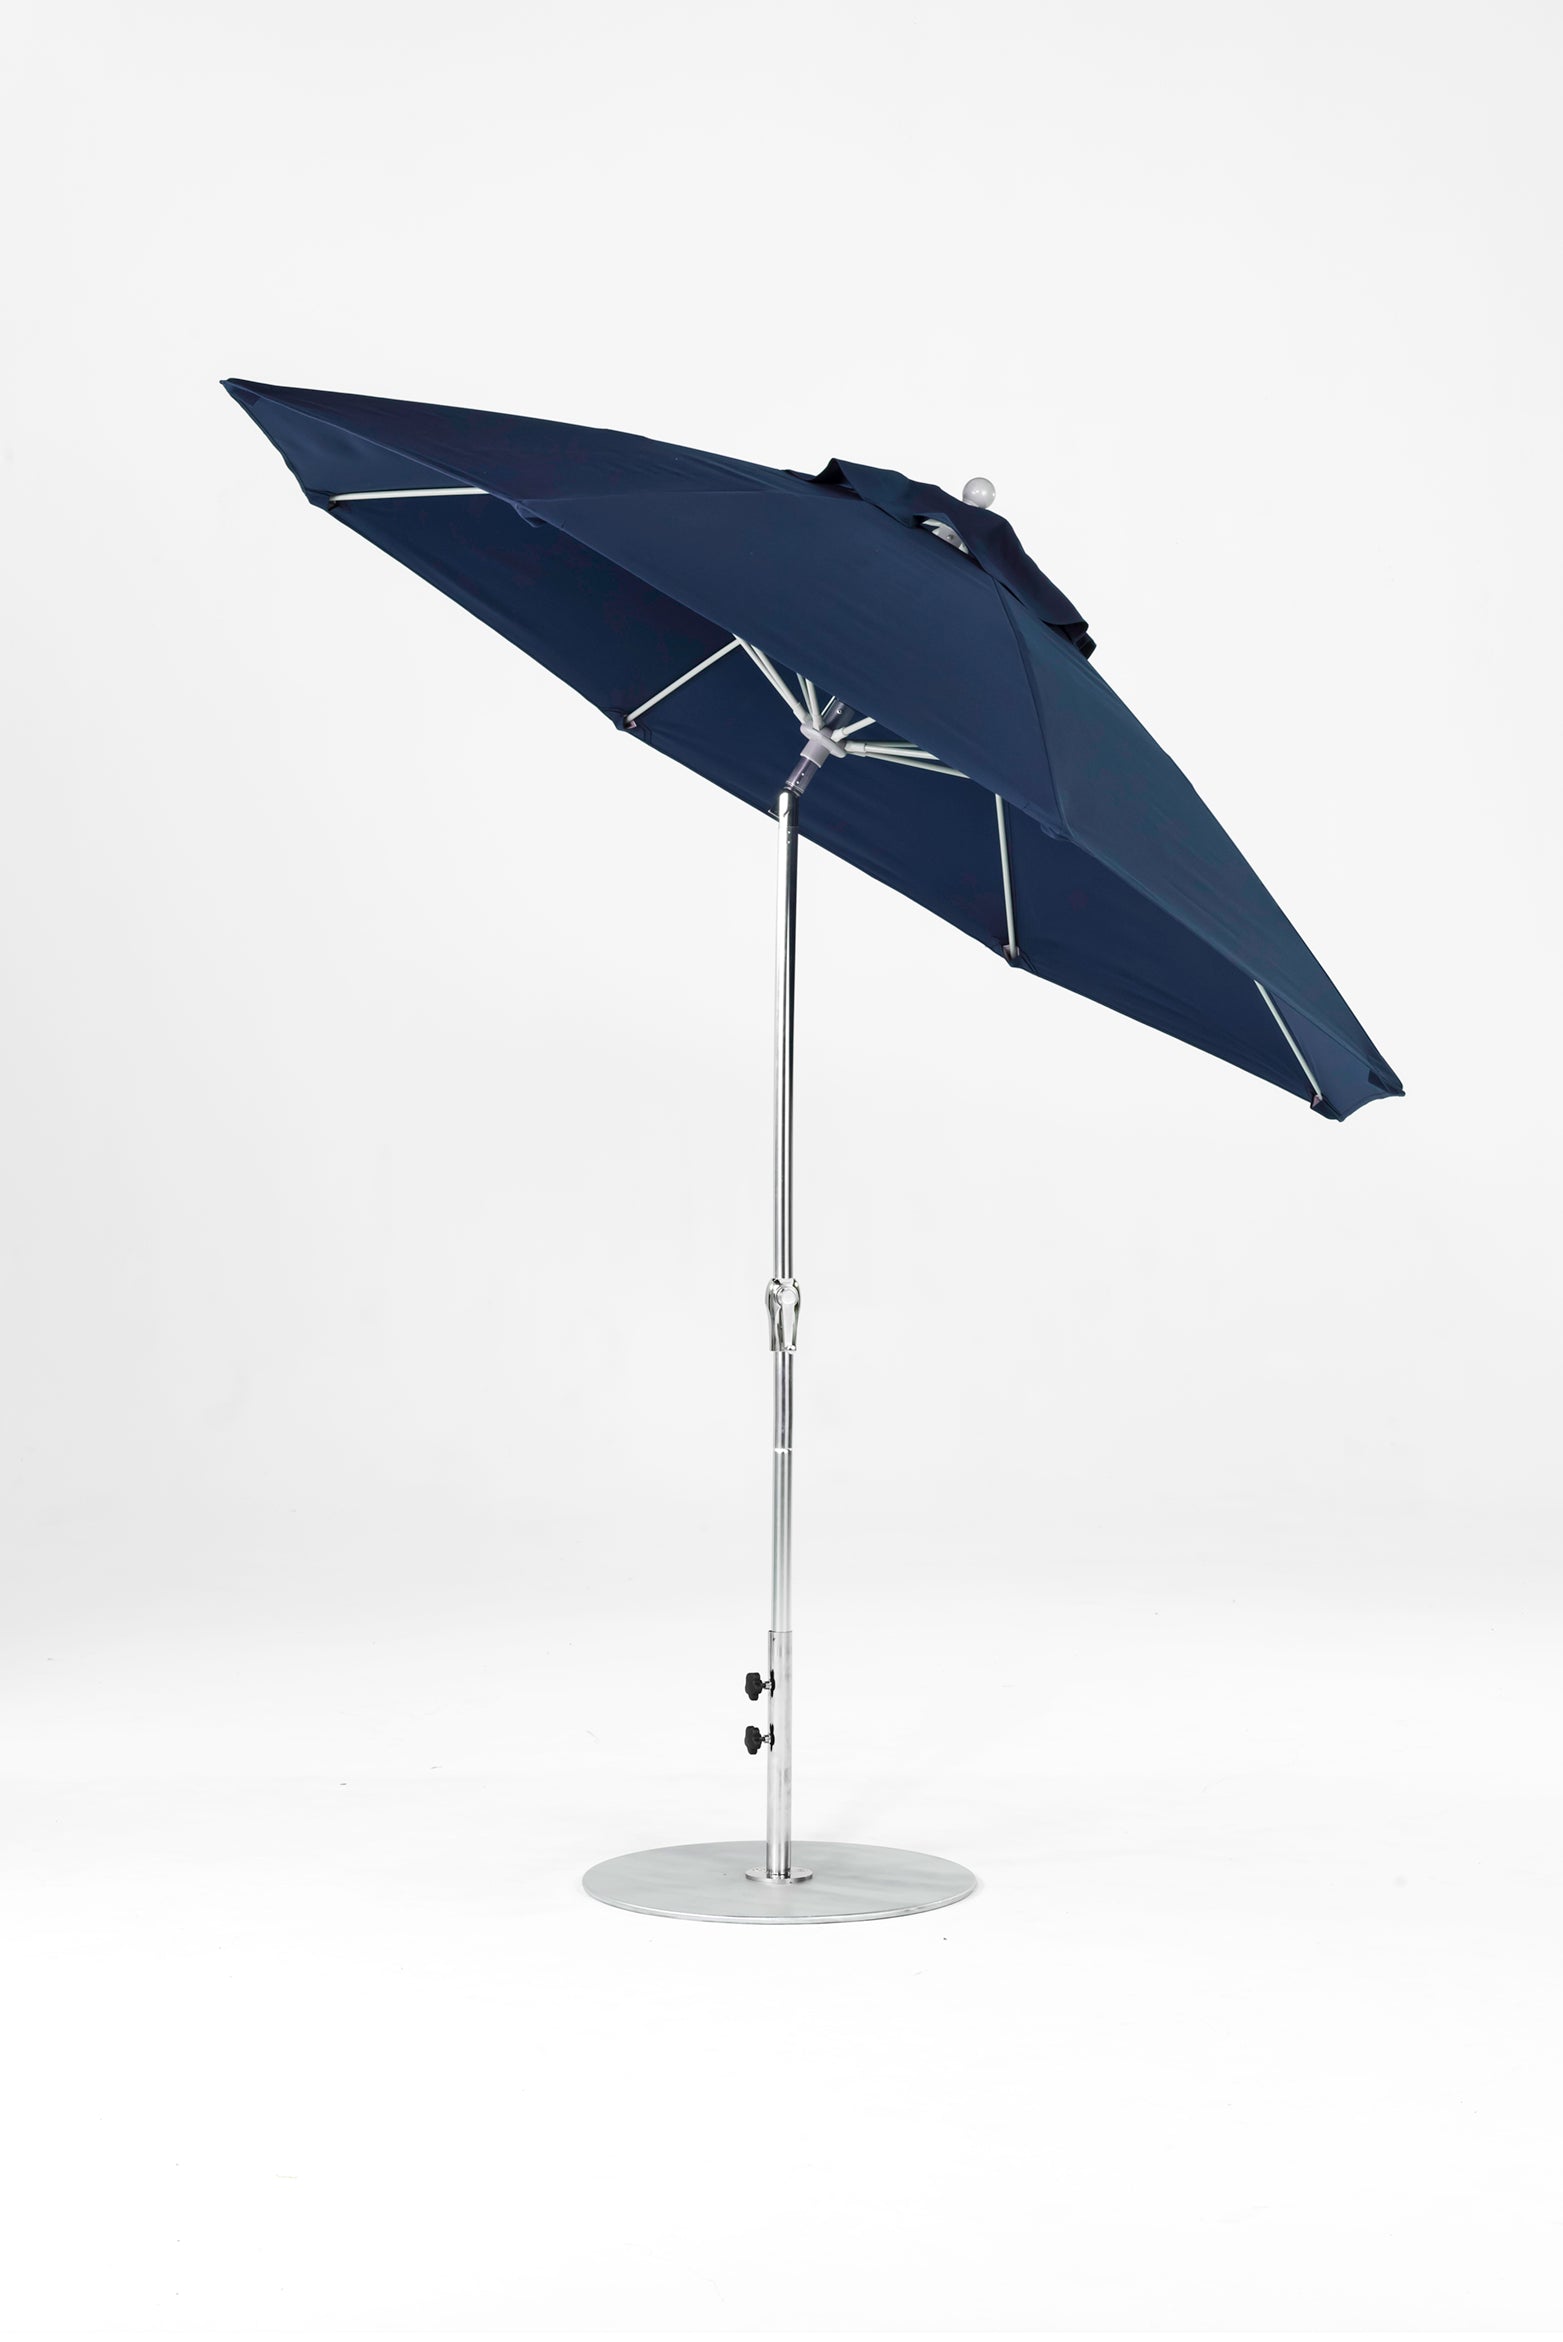 Monterey Market Umbrella - Crank/Auto Tilt